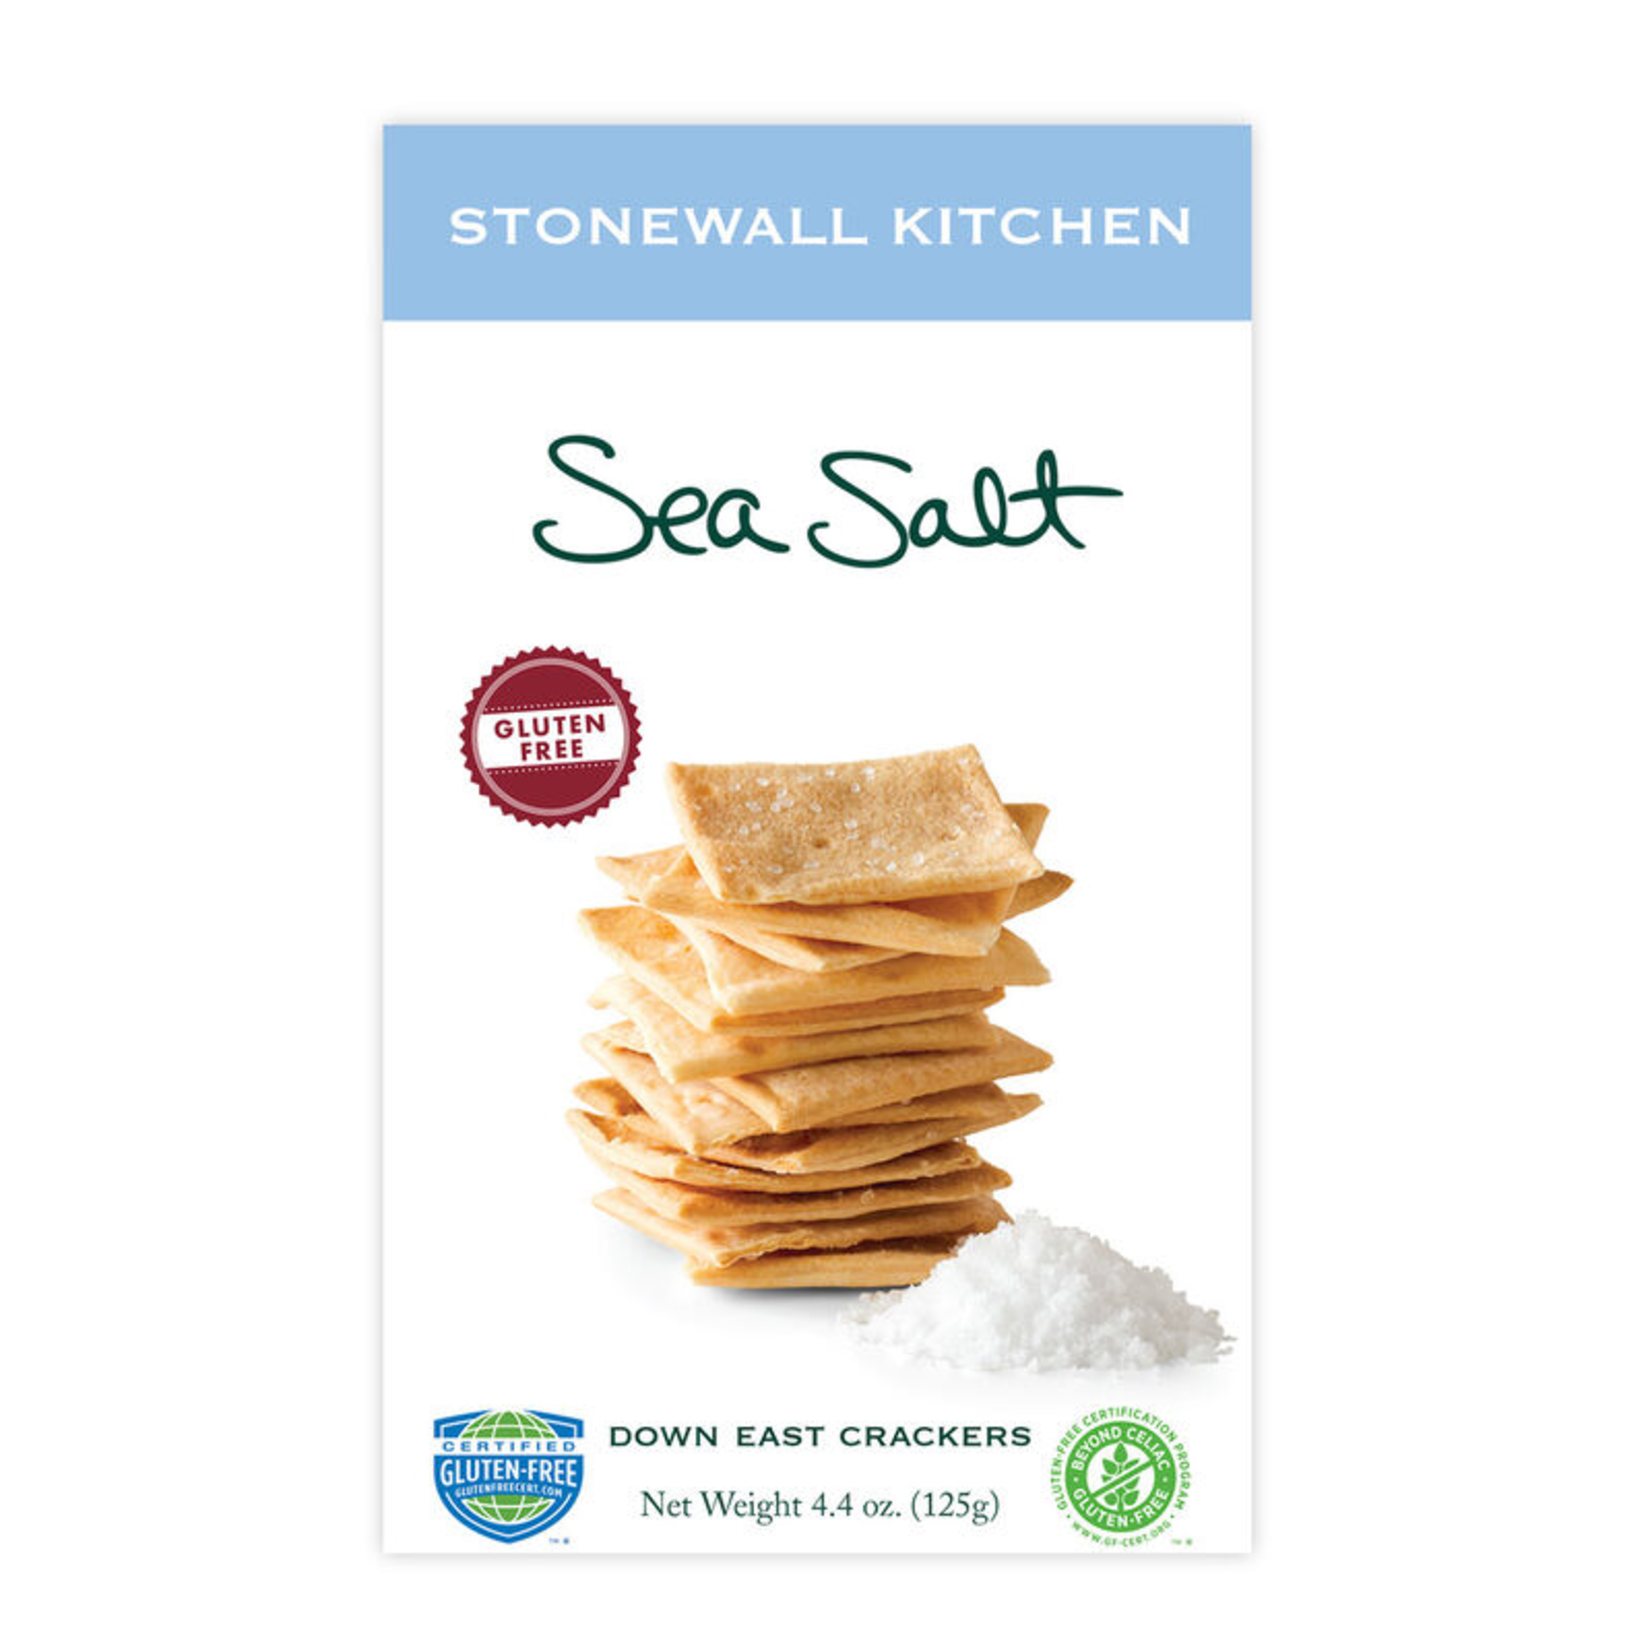 Stonewall Kitchen Stonewall Kitchen Gluten Free Sea Salt Crackers